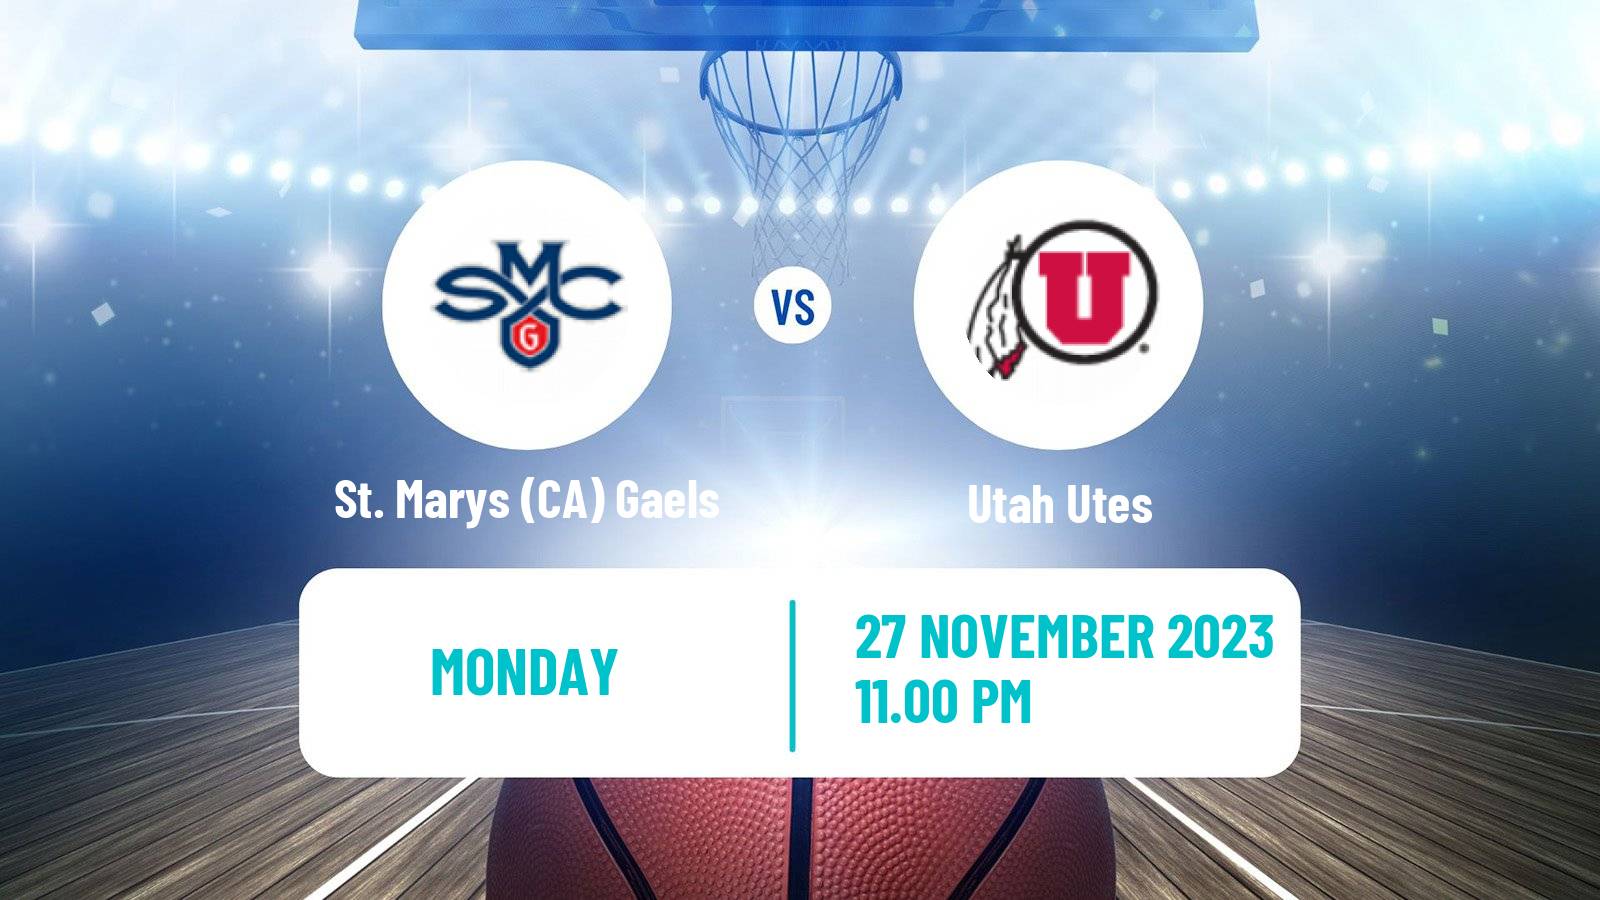 Basketball NCAA College Basketball St. Marys (CA) Gaels - Utah Utes